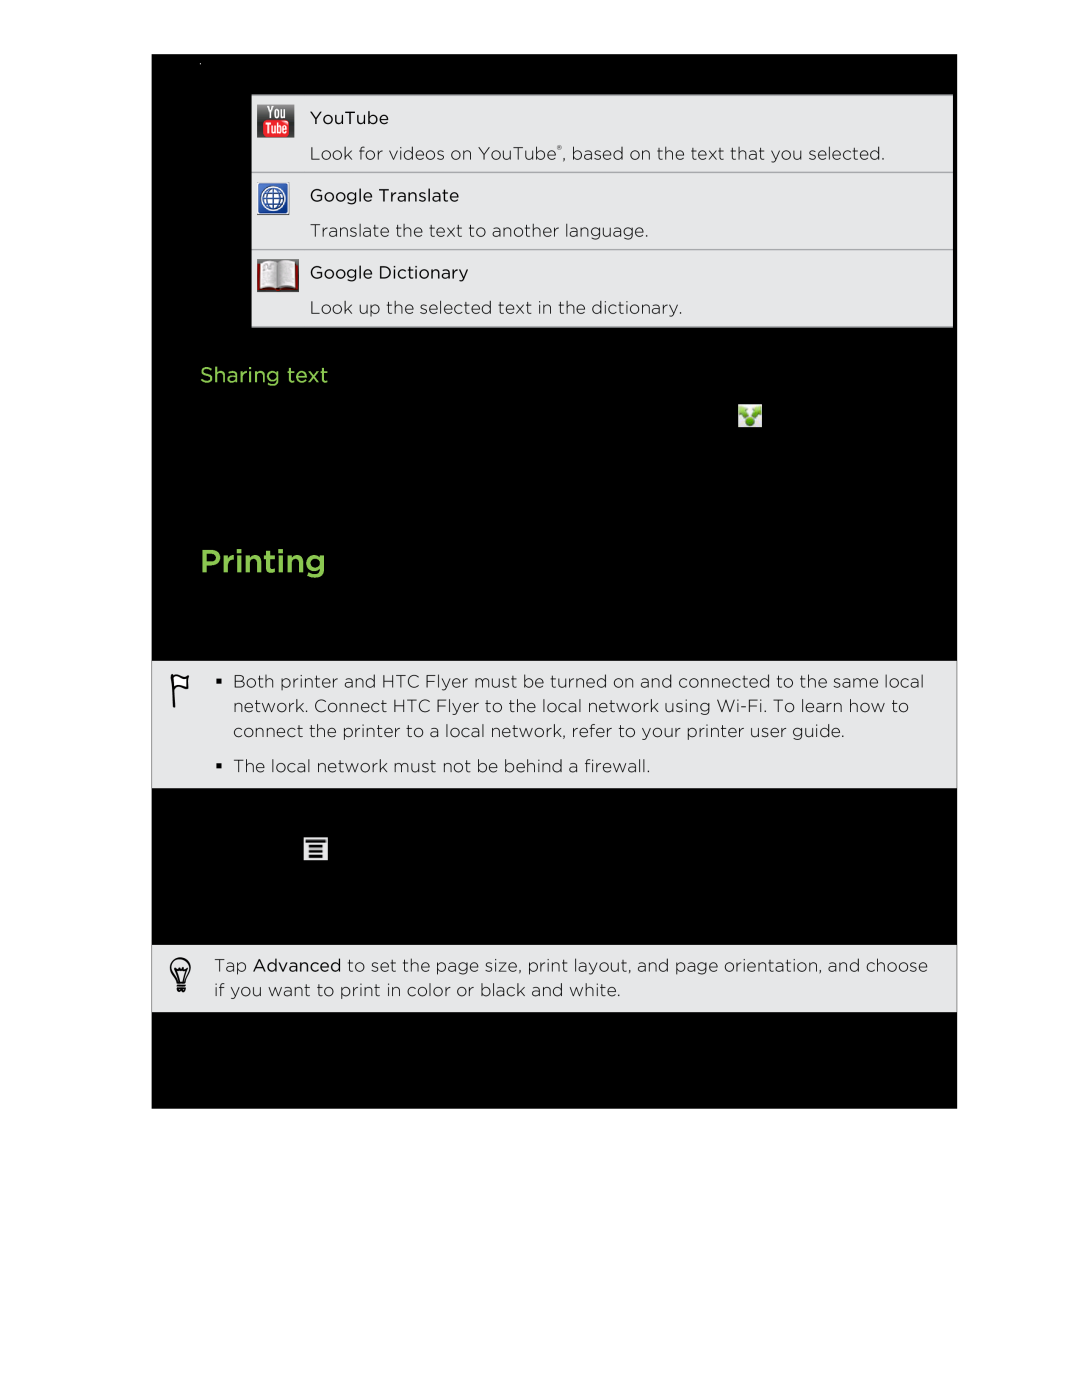 HTC HTCFlyerP512 manual Printing, Sharing text 